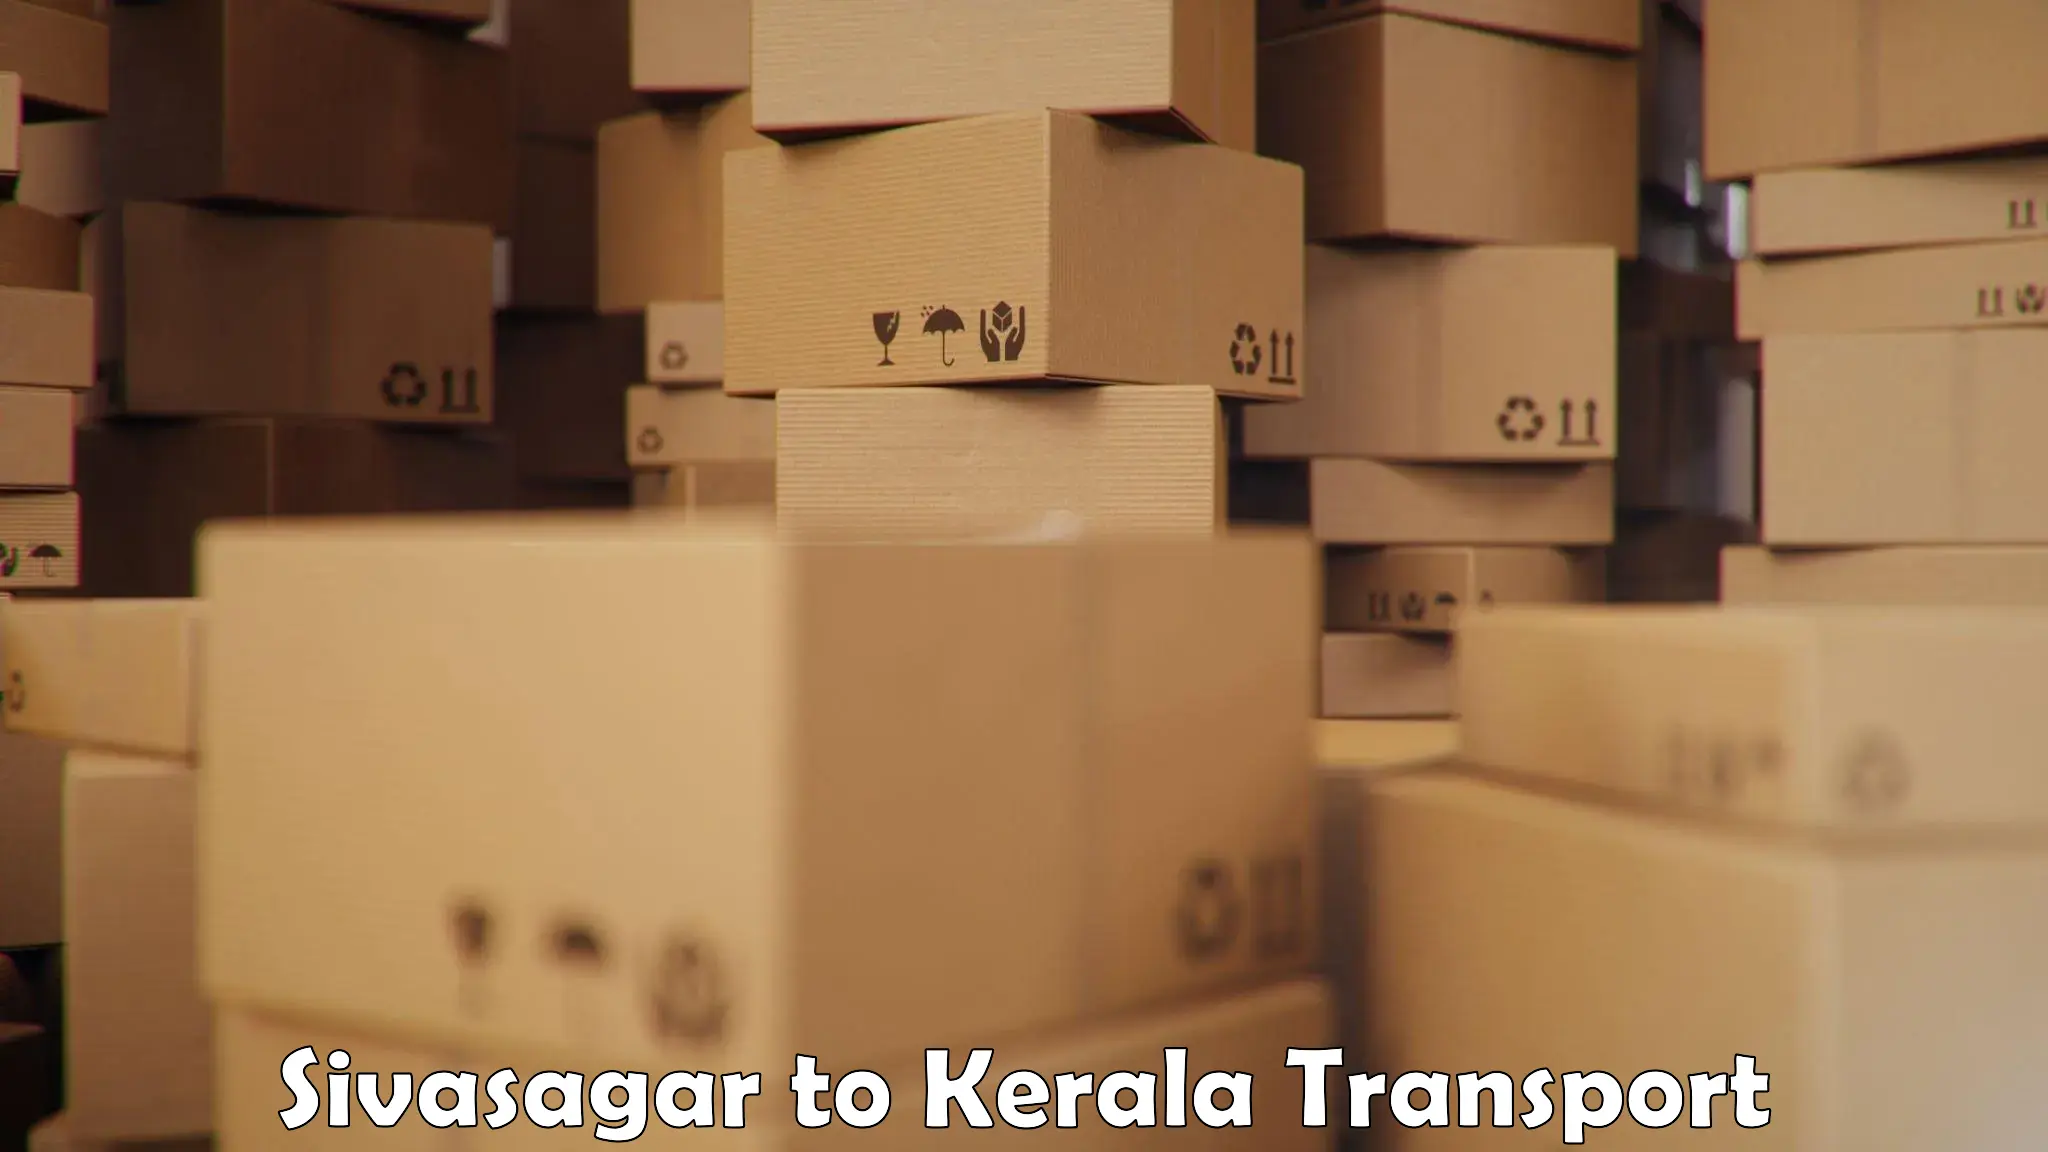 Truck transport companies in India Sivasagar to Kerala